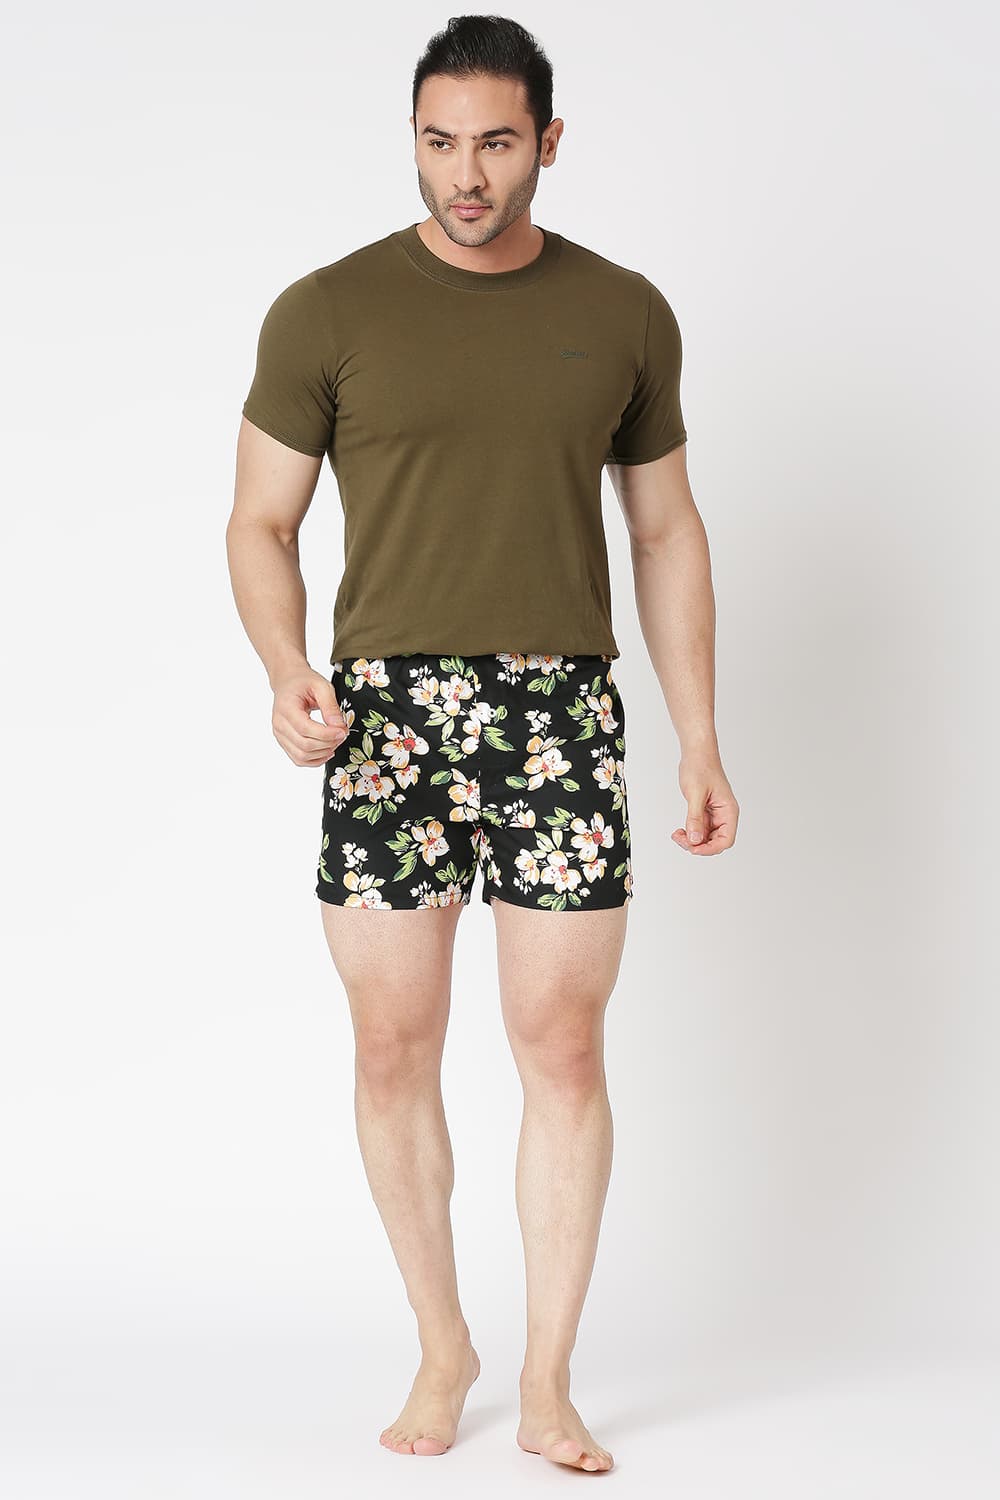 Slim Fit Cotton Printed Boxer Shorts